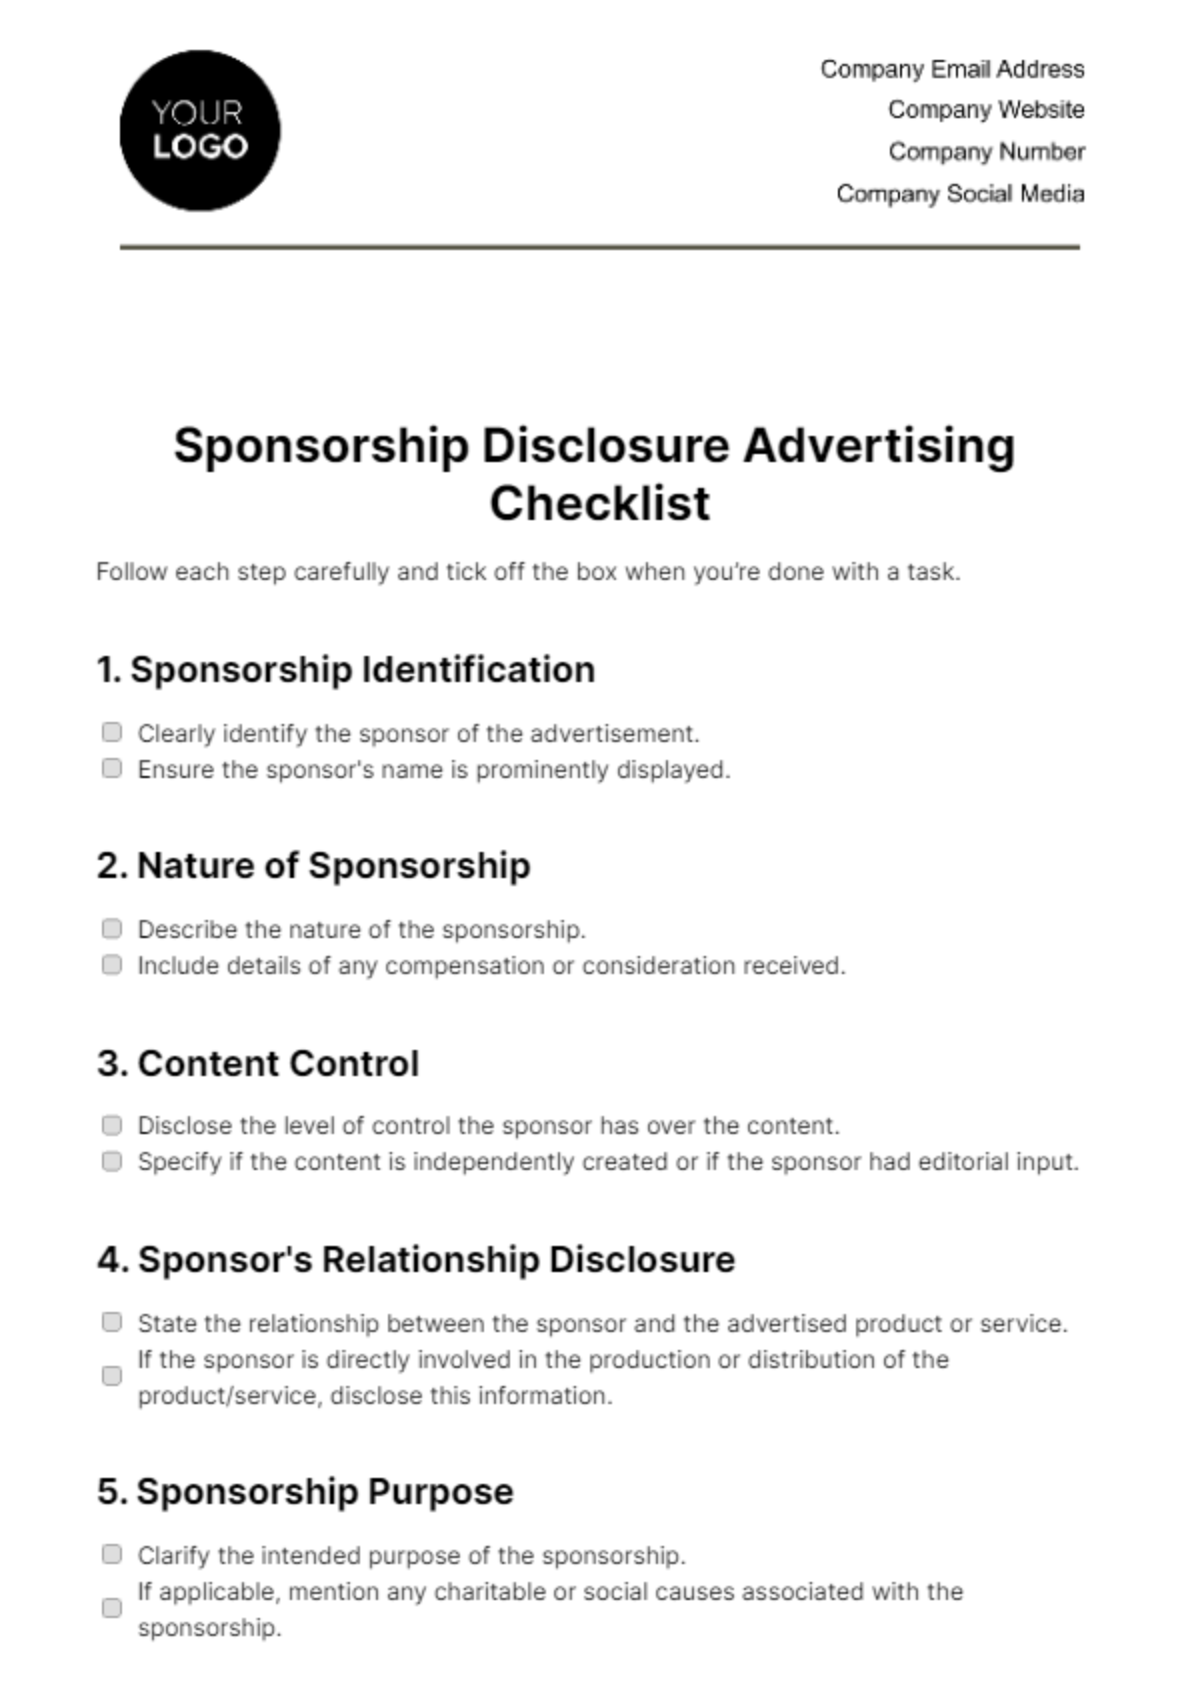 Free Sponsorship Disclosure Advertising Checklist Template